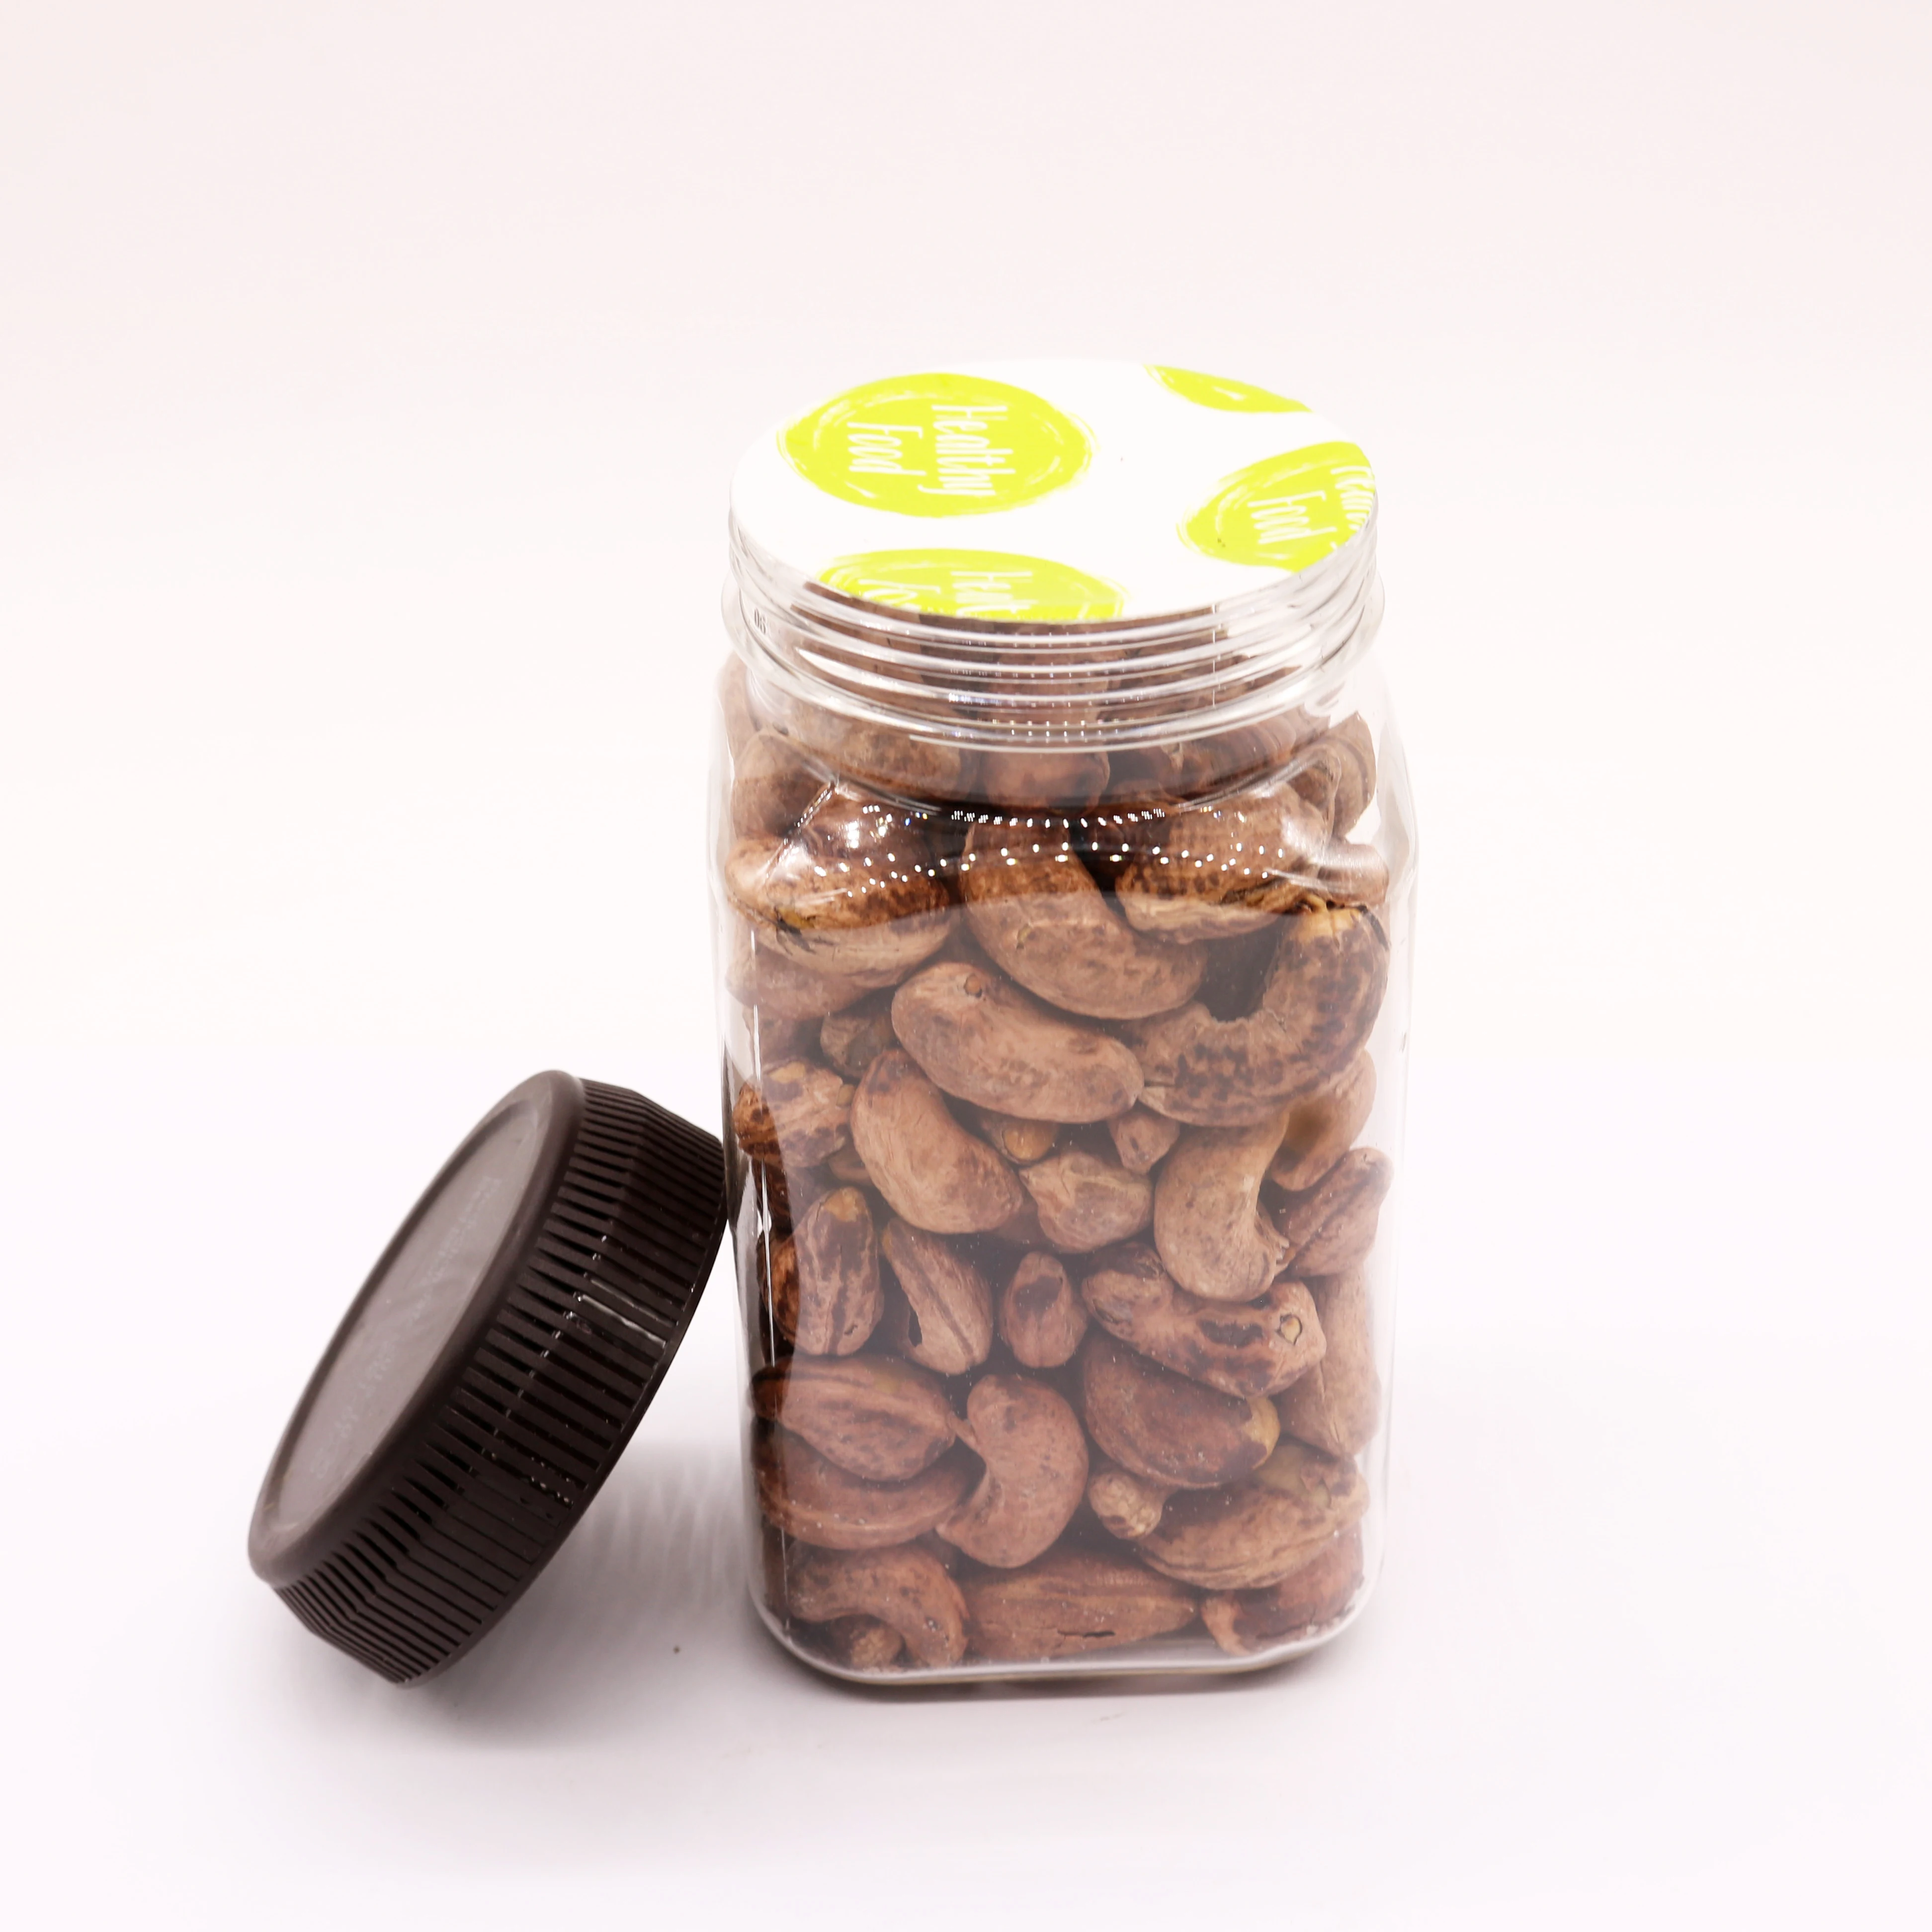 Dried Unpeel Cashew Nuts 200g Plastic Jar Origin Vietnam Natural Delicious Snack